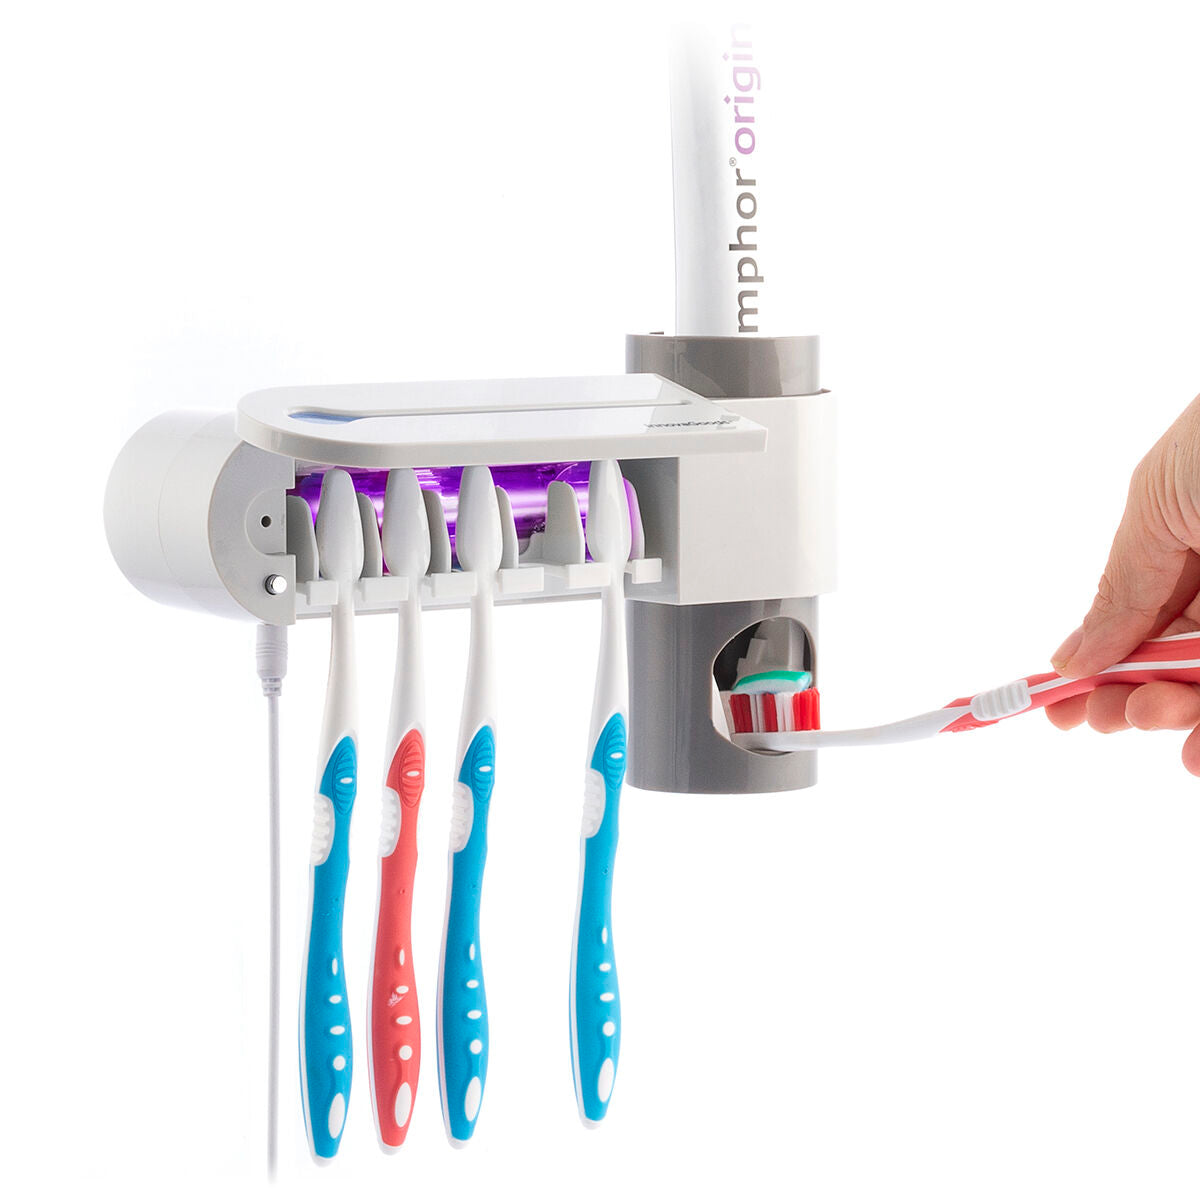 UV Οδοντόβουρτσα Στεγτηρών με περίπτερο και διανομέα οδοντόκρεμας Smiluv Innovagoods